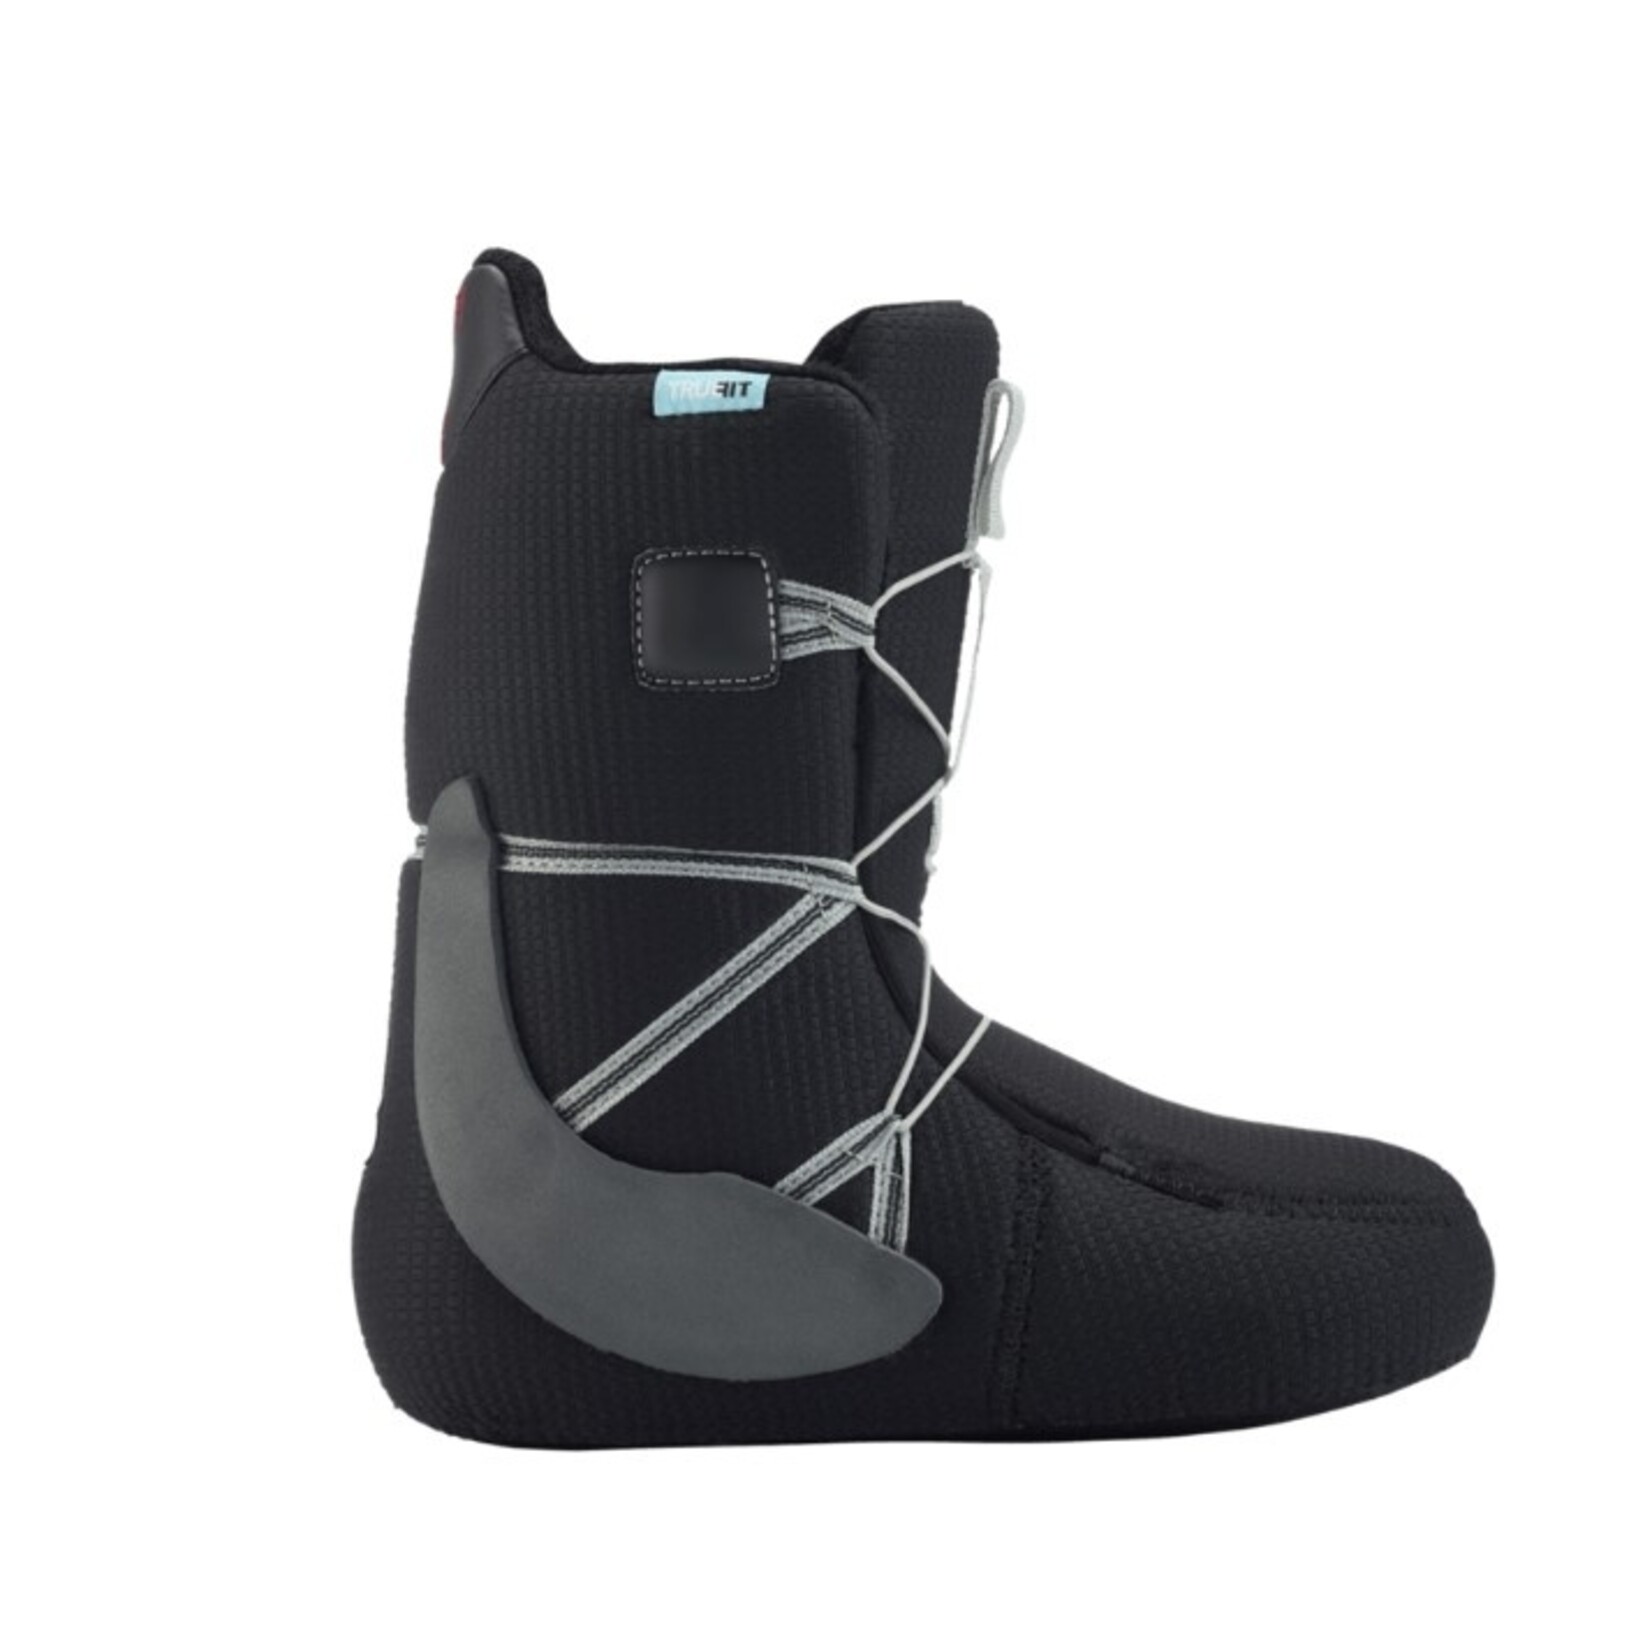 BURTON Women's Mint BOA® Snowboard Boots